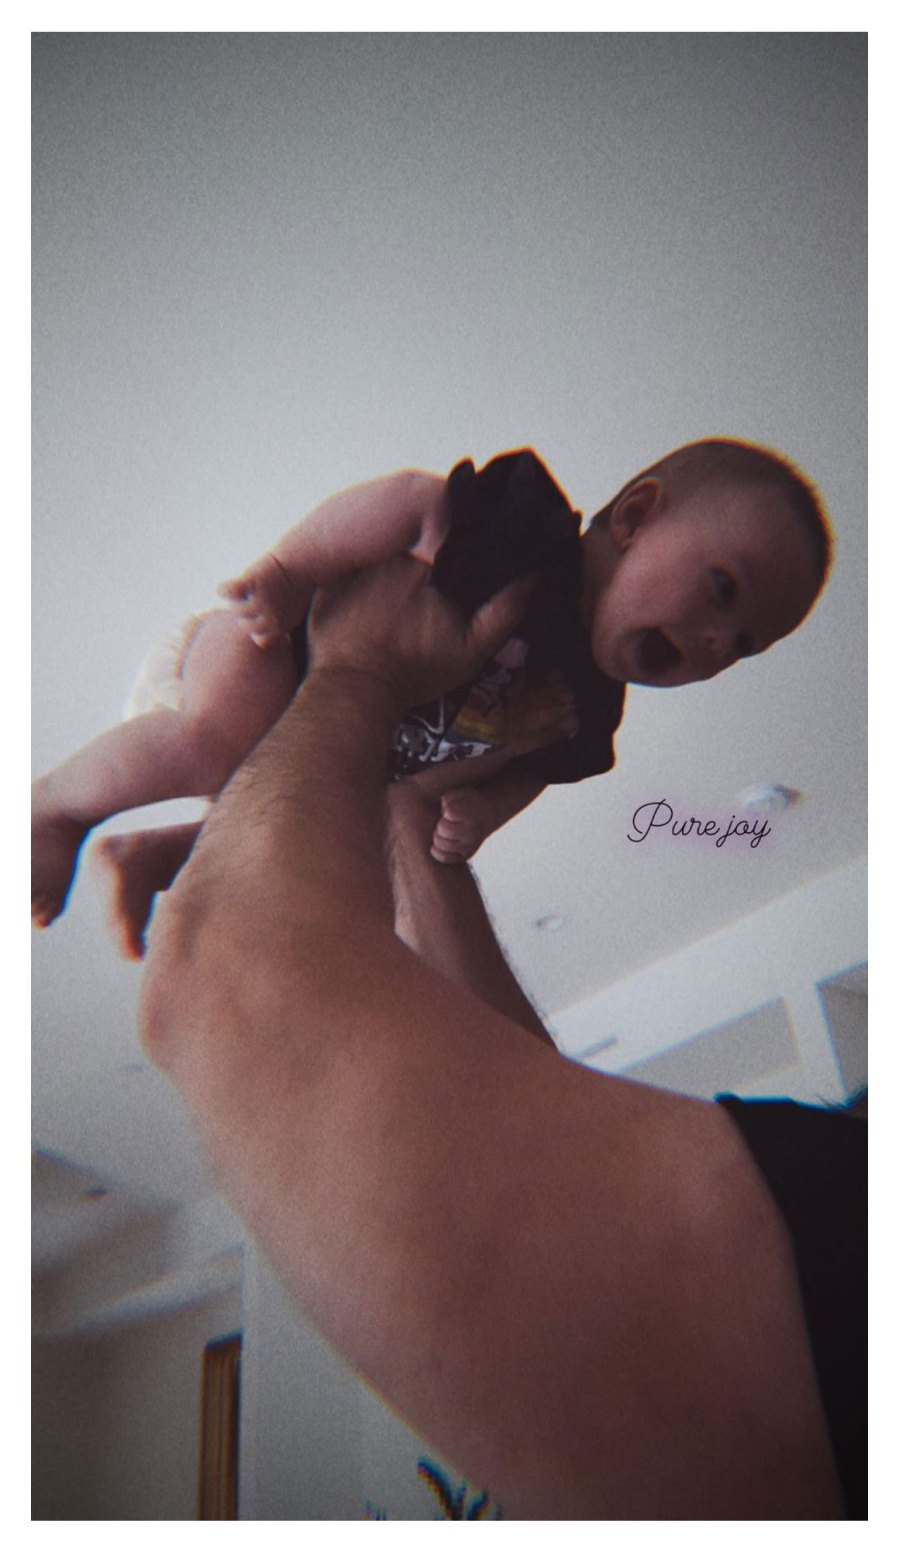 Steve Kazee Jenna Dewan Callum 3 Months Old Baby